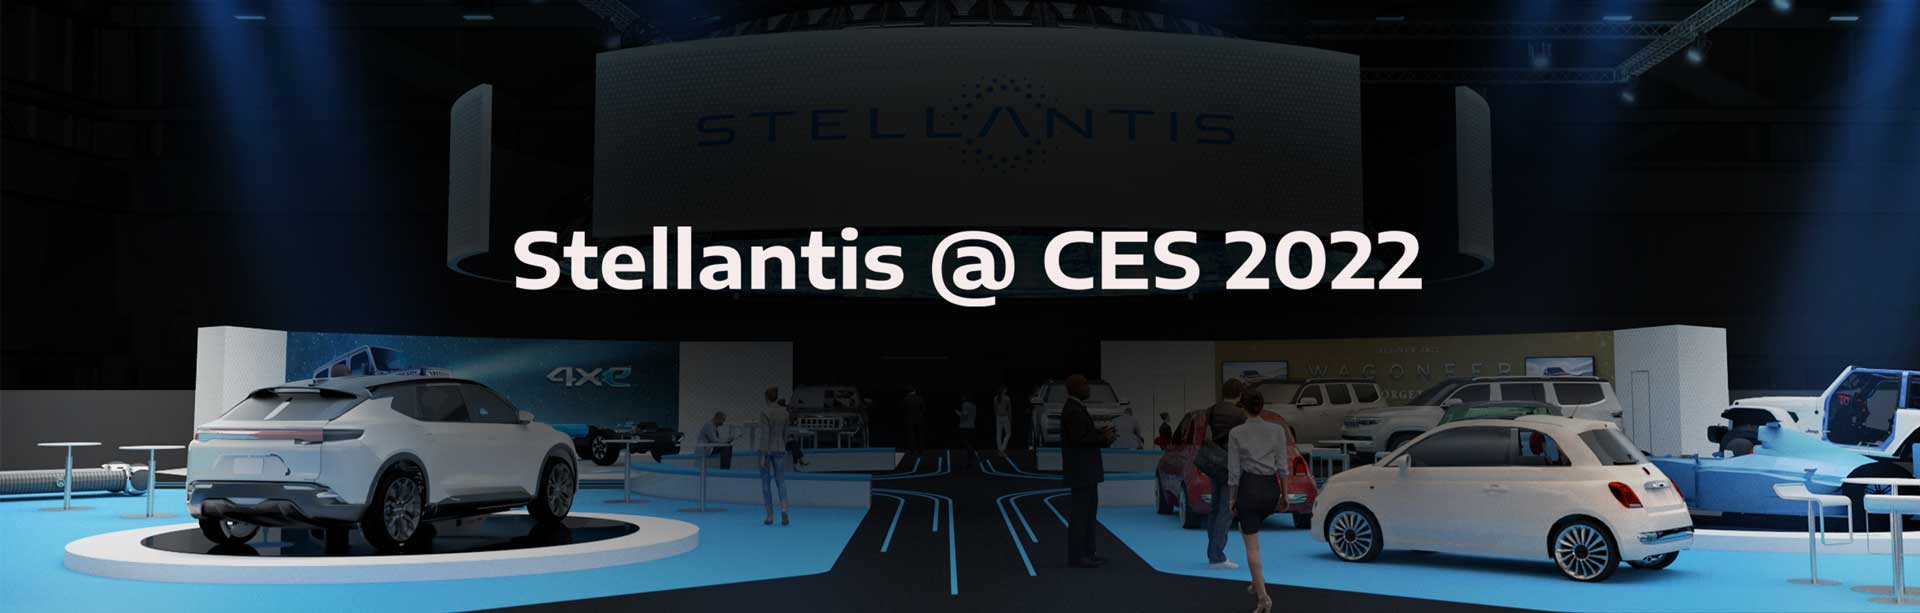 image of Stellantis @ CES 2022